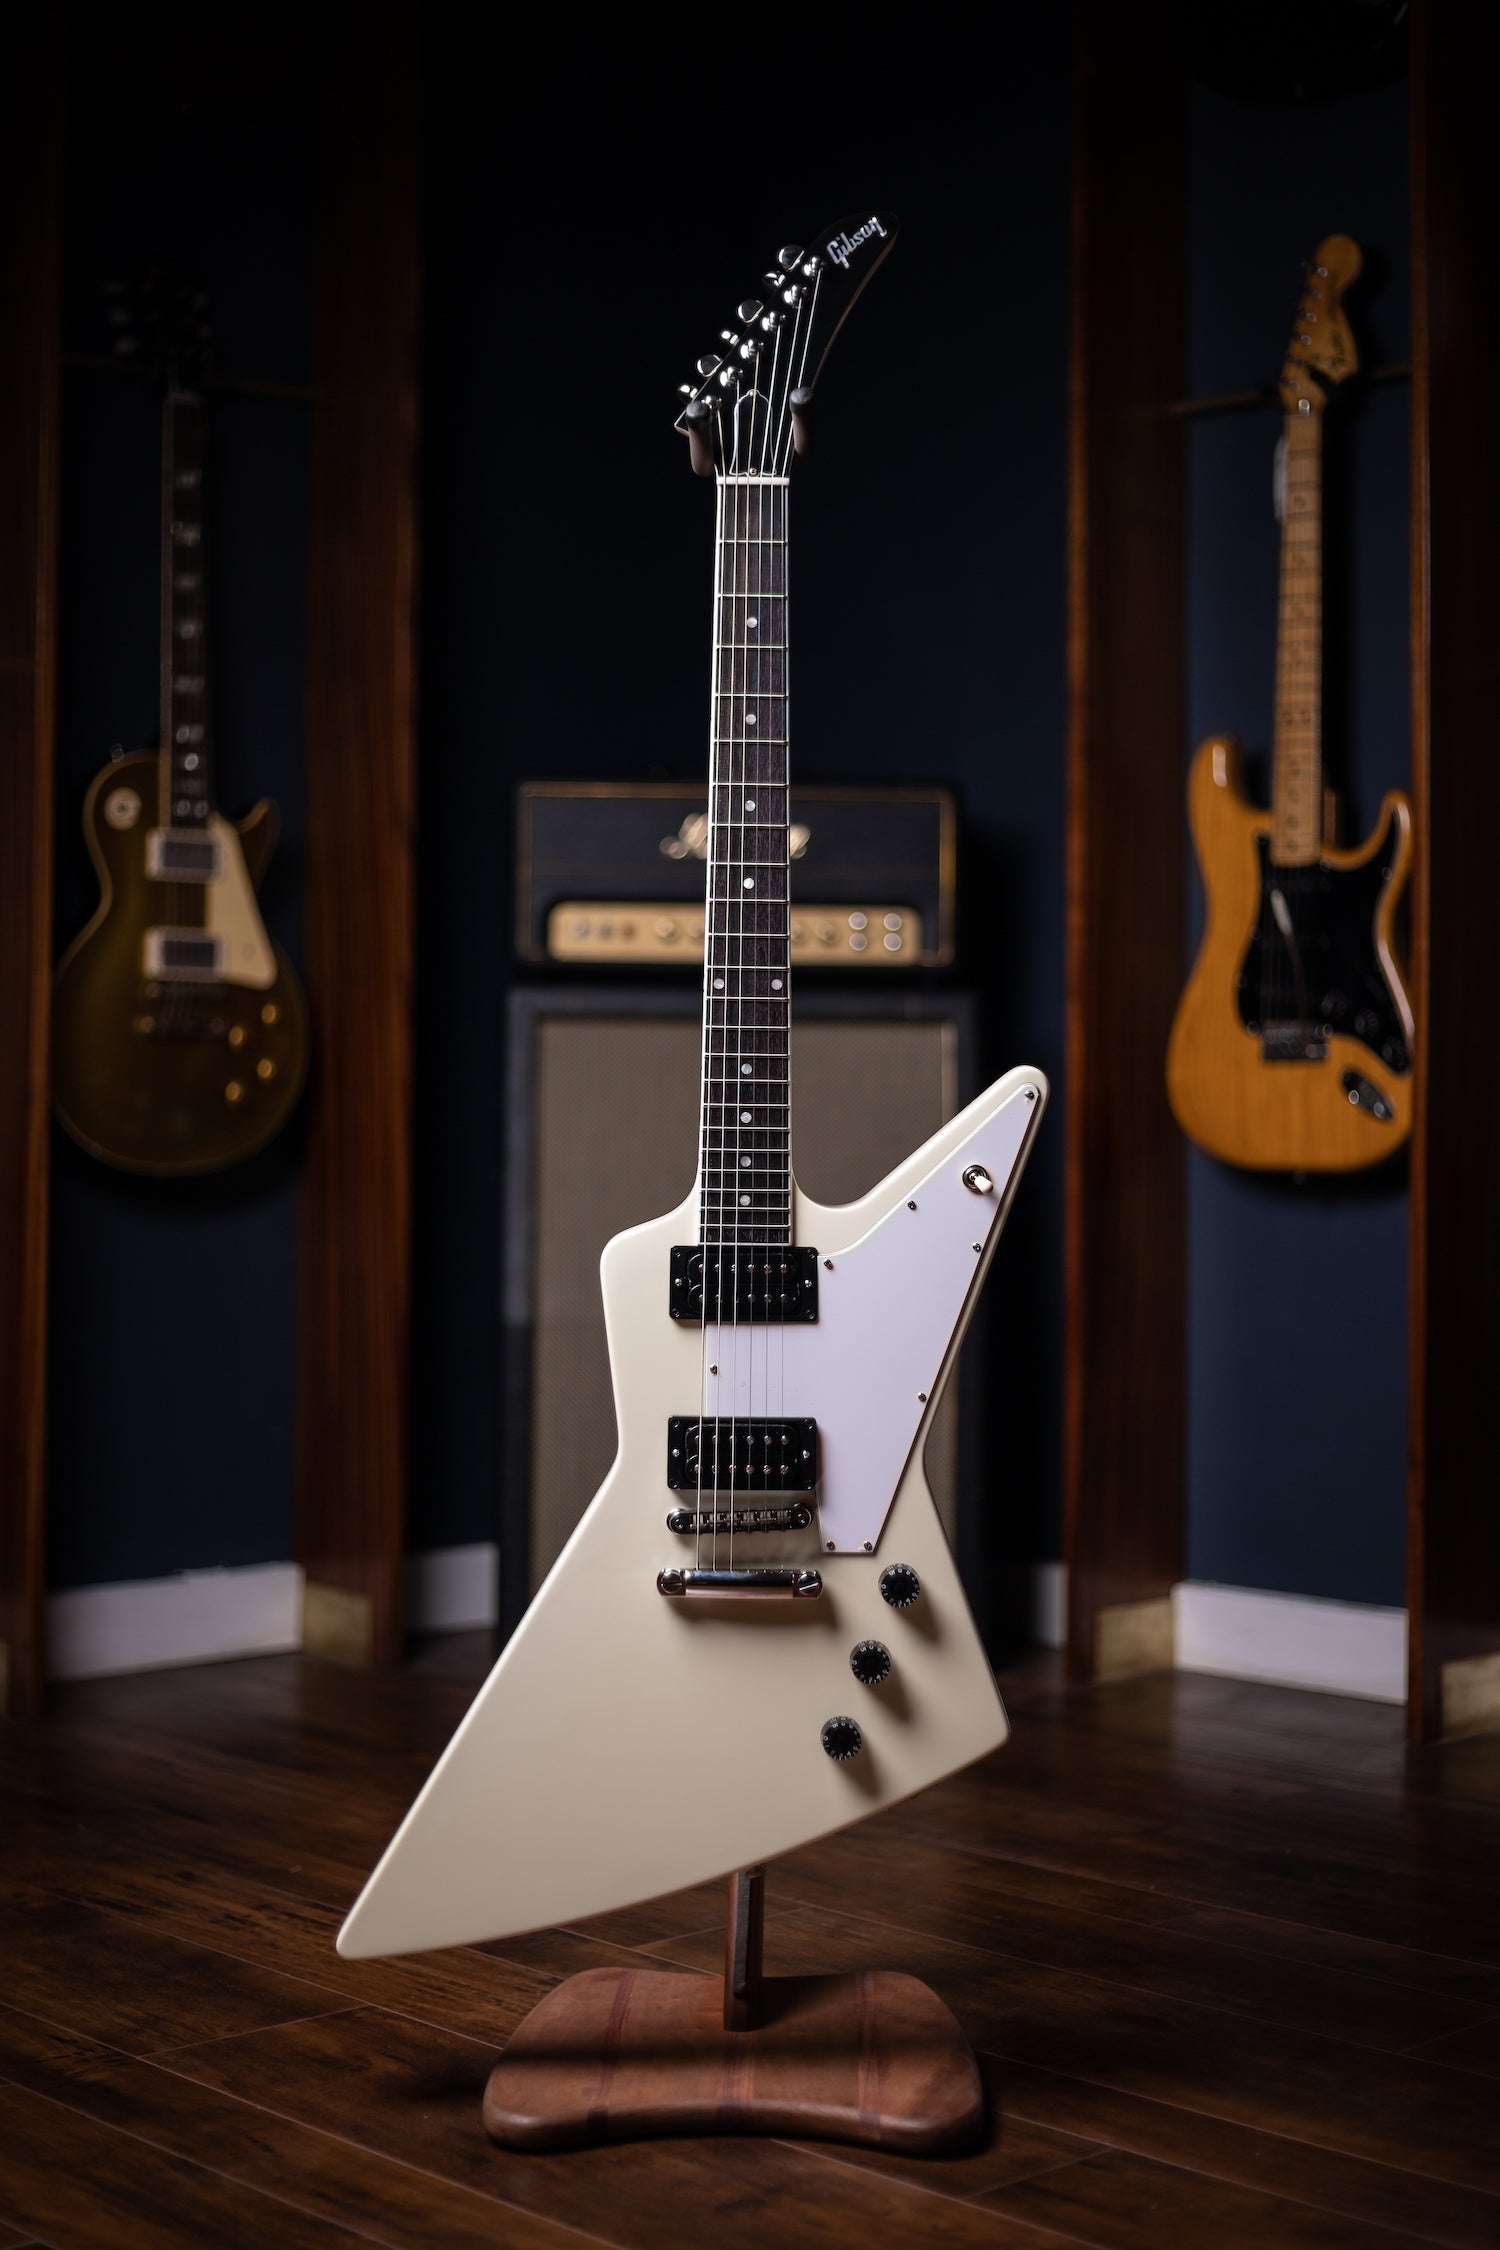 GIBSON - Guitare Electrique 70s Explorer Classic White